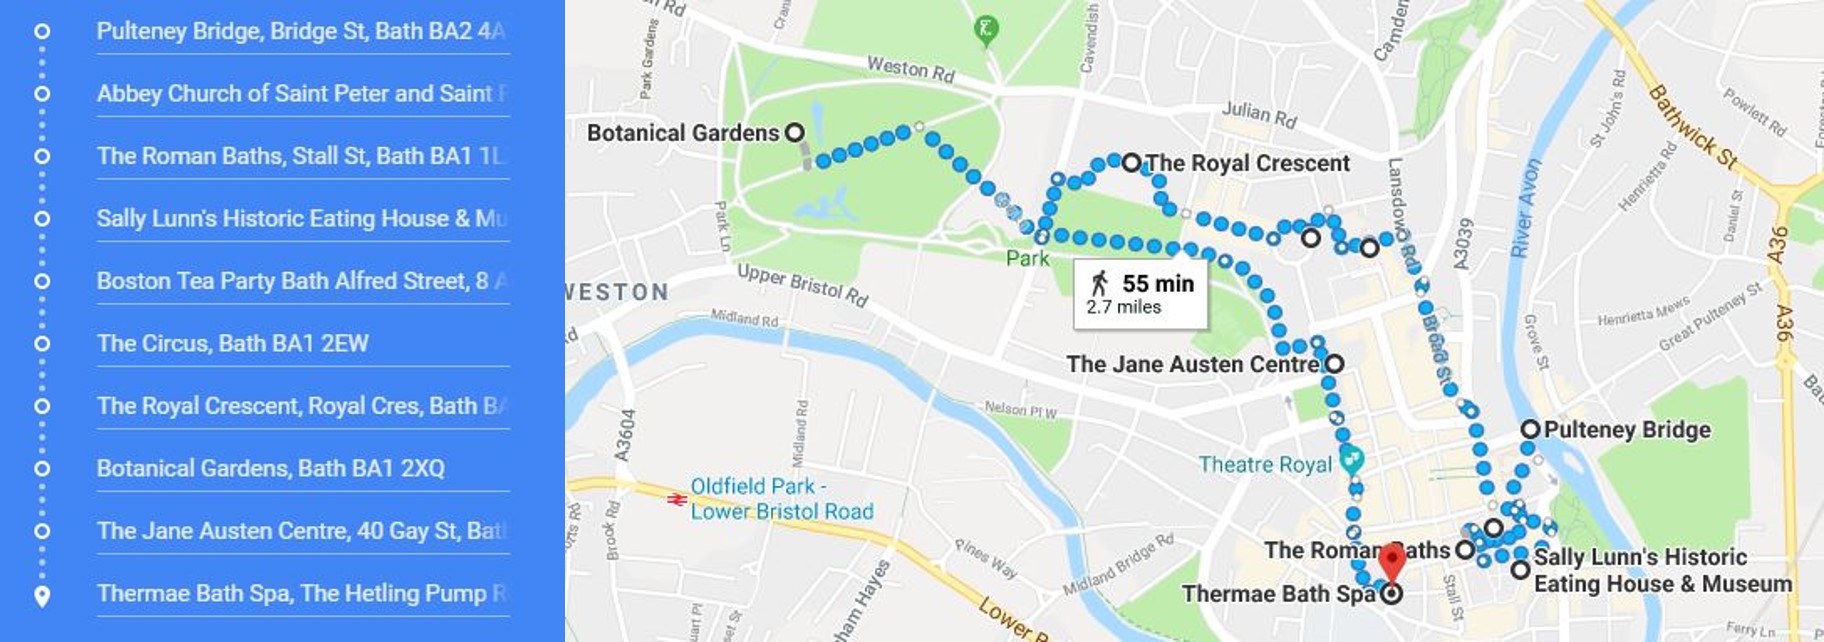 Walking Tour of Bath - Map Route